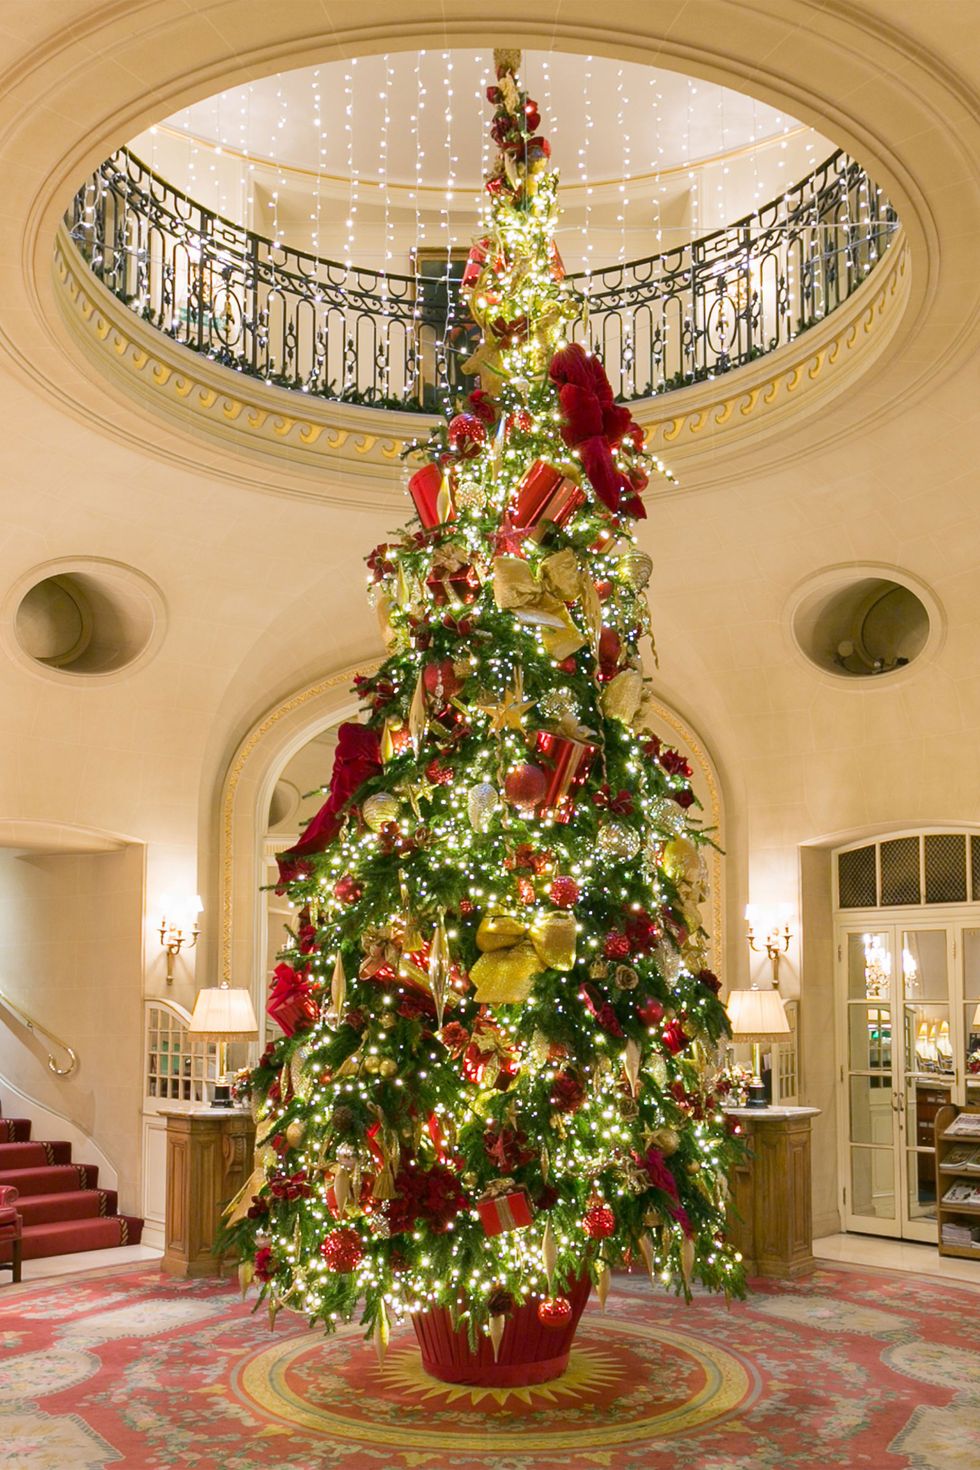 Interior design, Christmas decoration, Room, Christmas tree, Red, Leaf, Christmas ornament, Interior design, Holiday, Holiday ornament, 